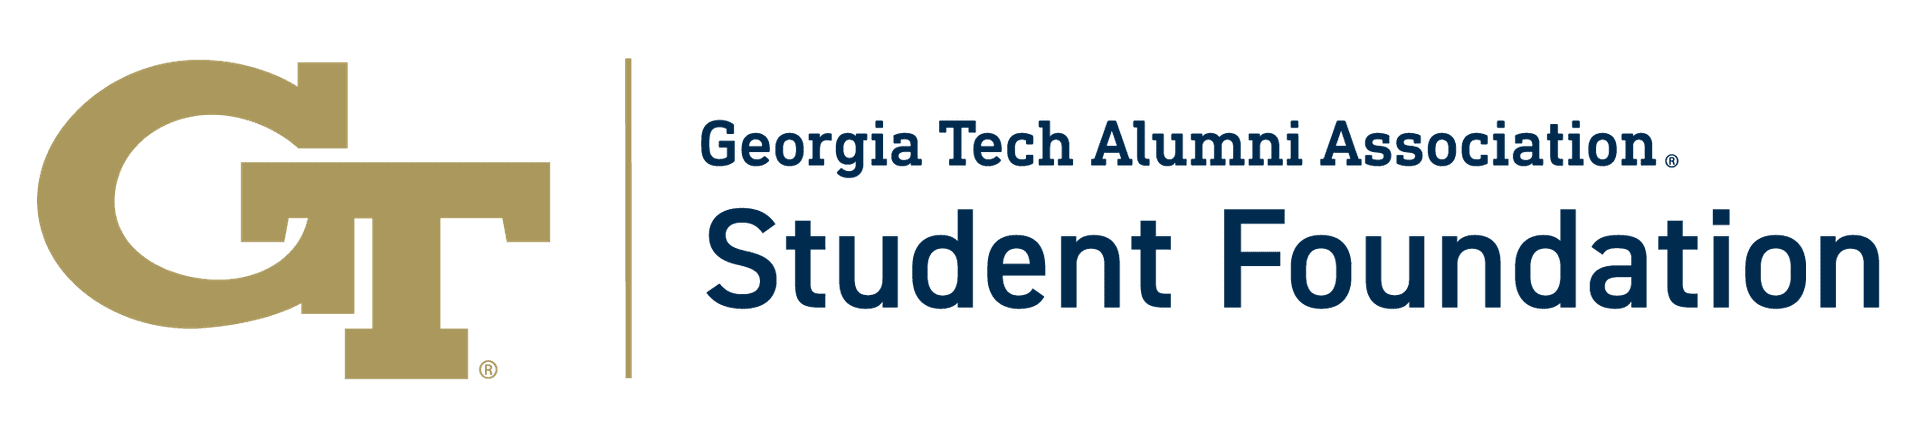 Georgia Tech Alumni Association Student Foundation